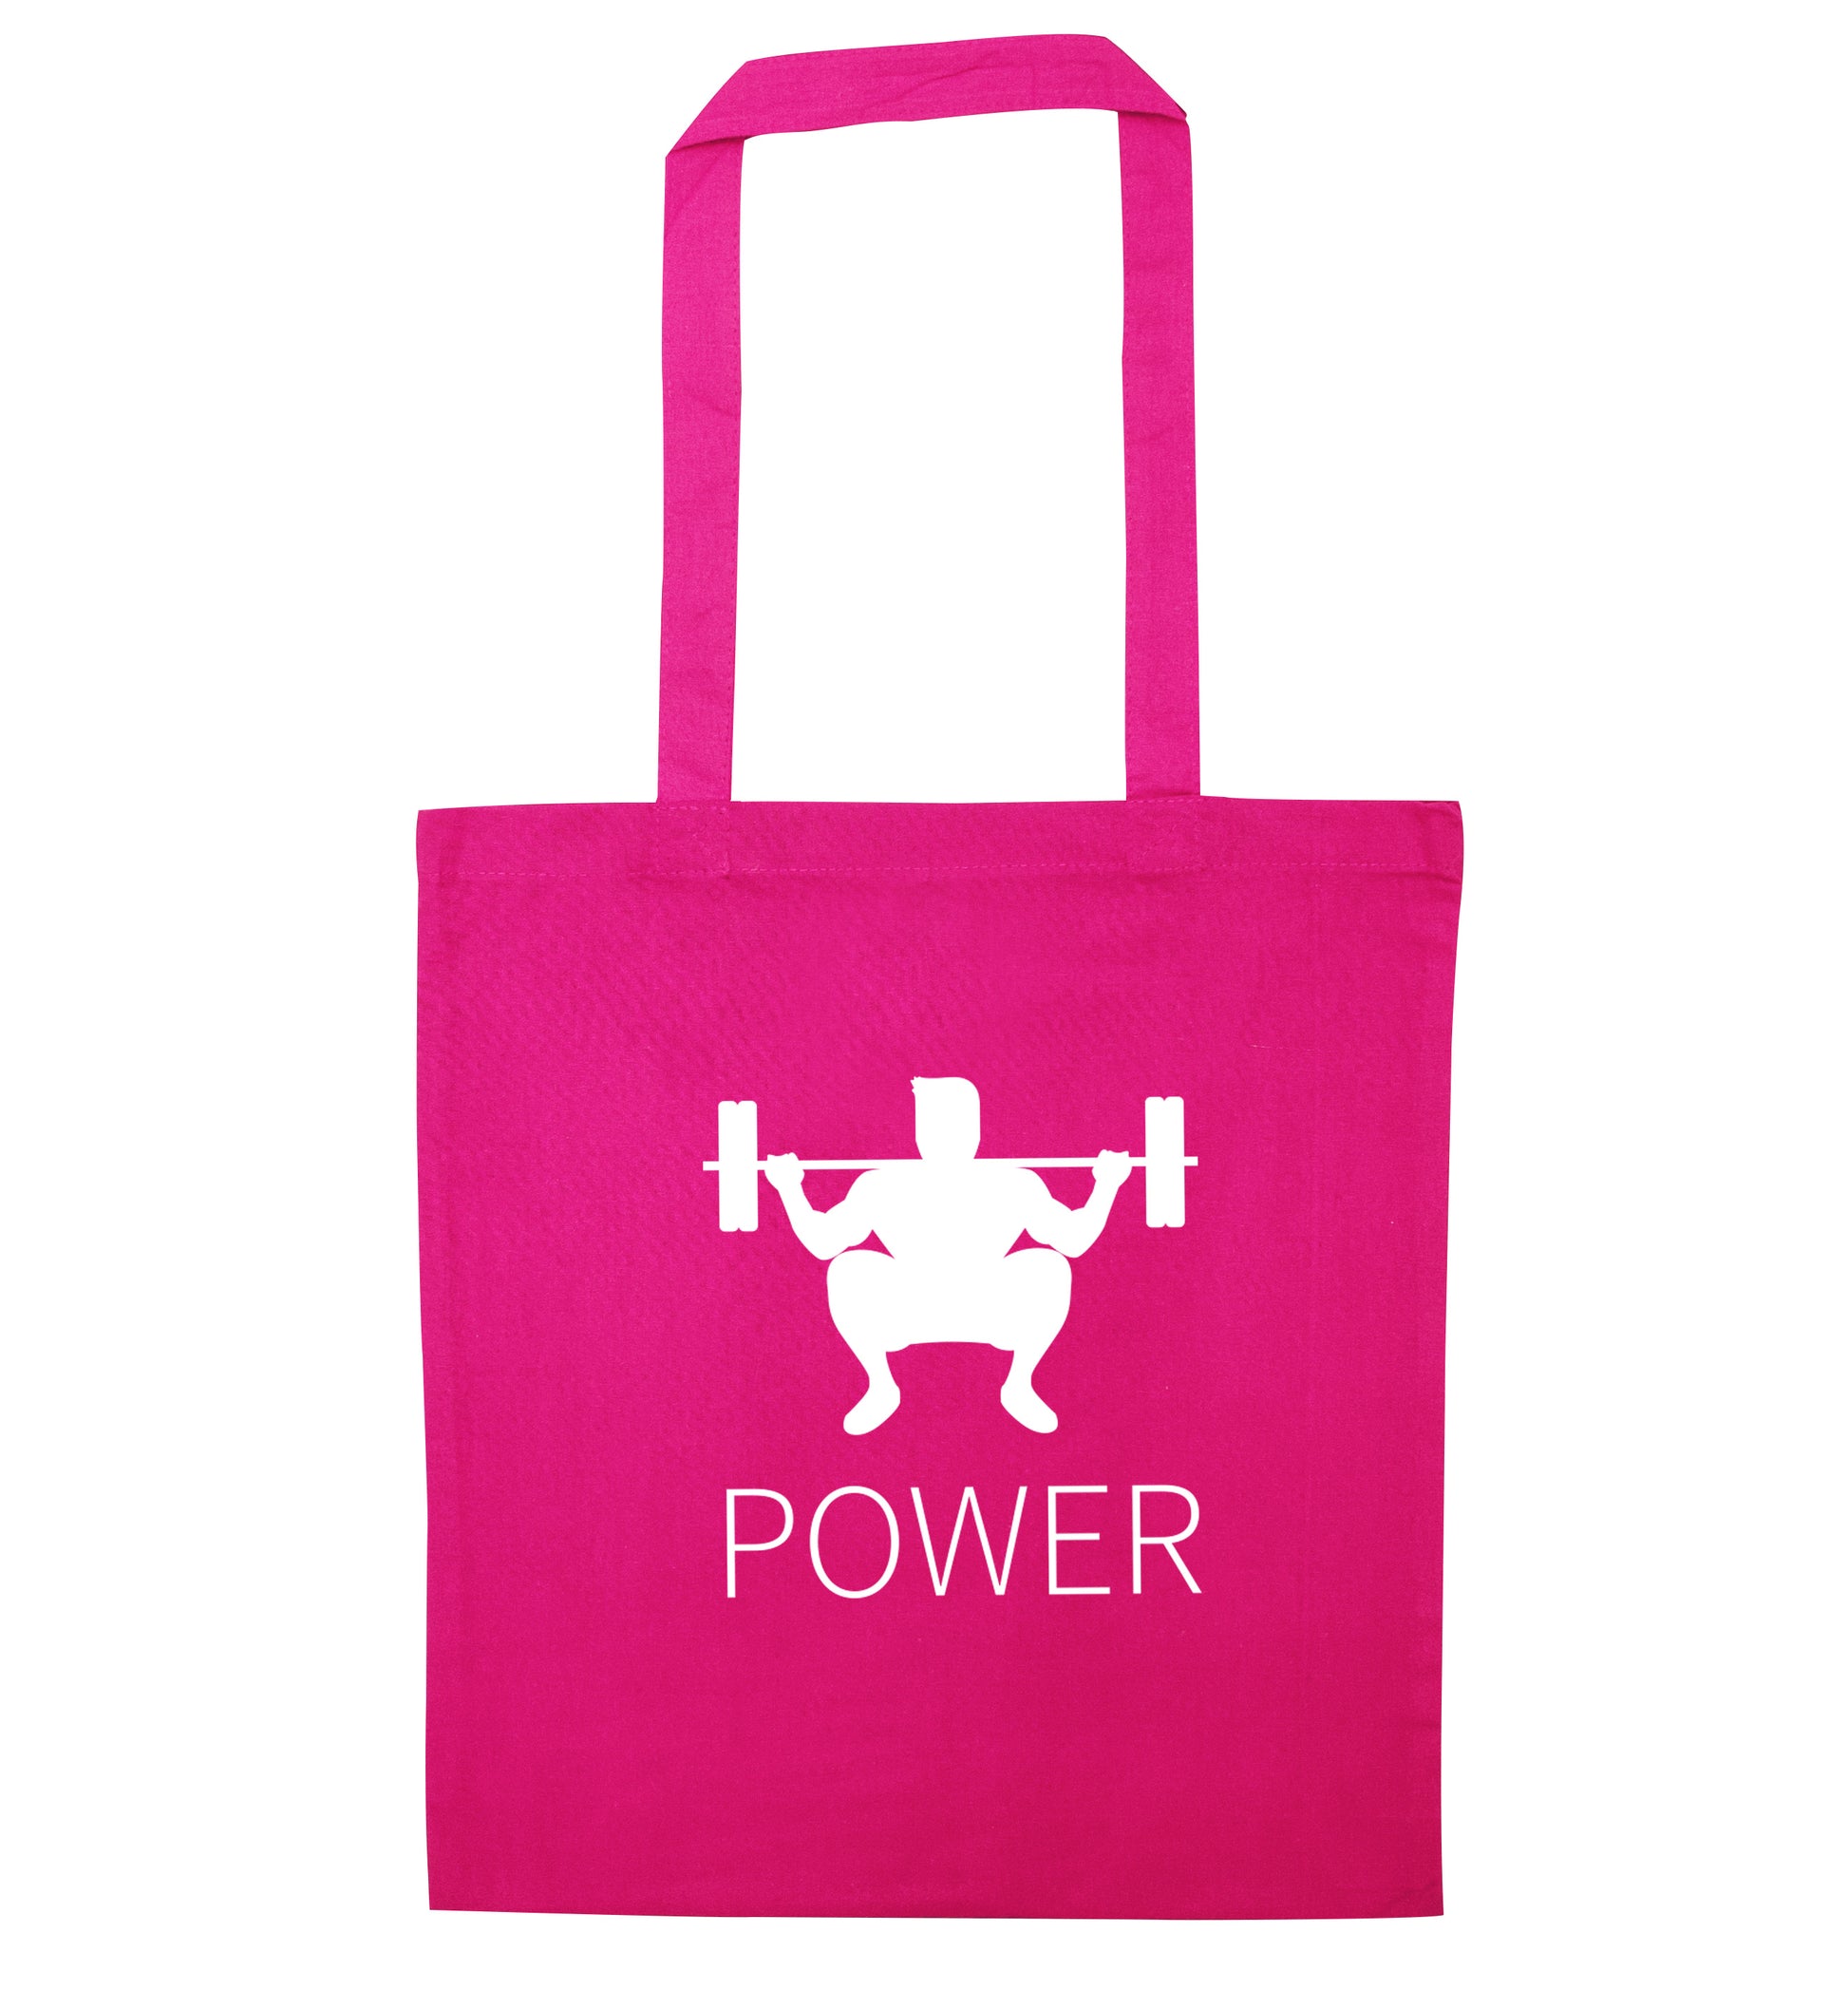 Lift power pink tote bag